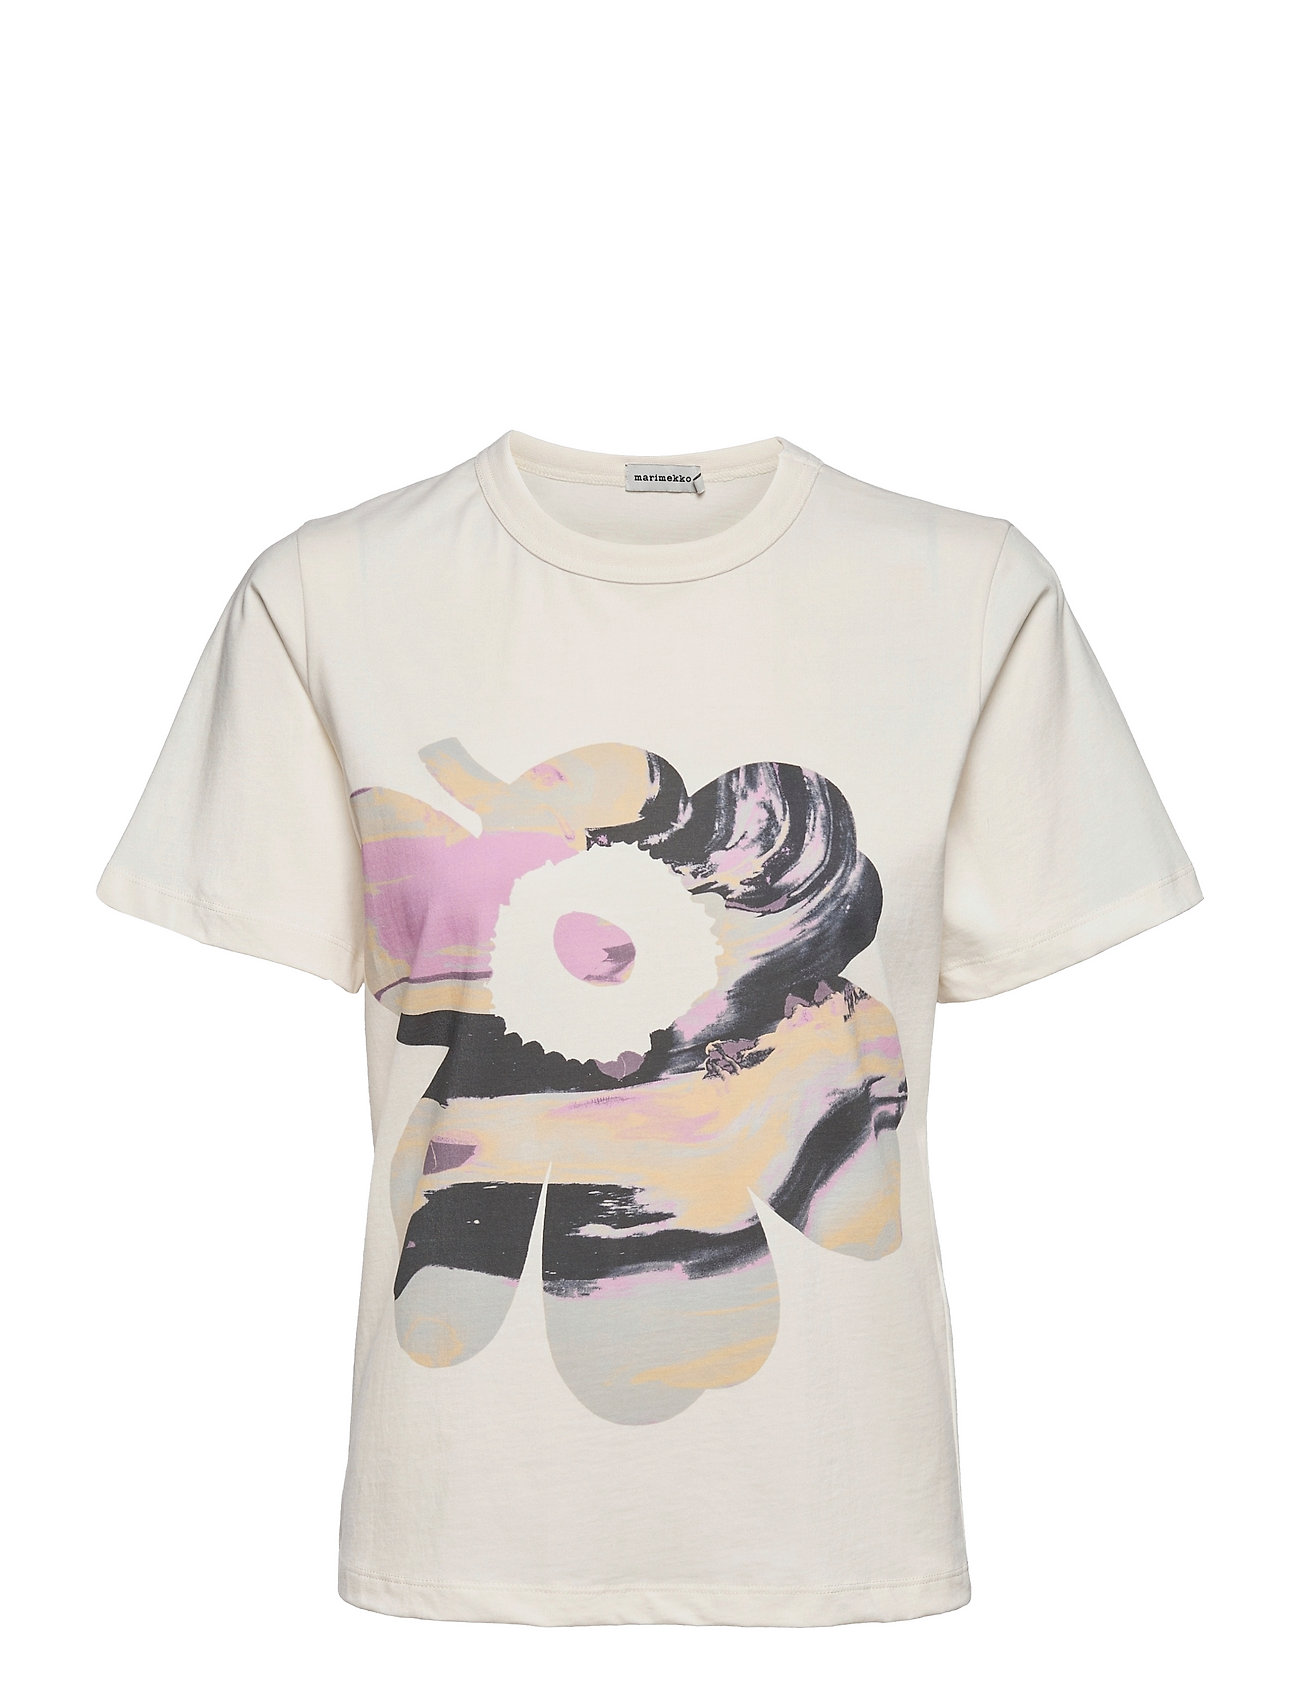 Hyvike Maisema Unikko T-Shirt T-shirts & Tops Short-sleeved Valkoinen Marimekko